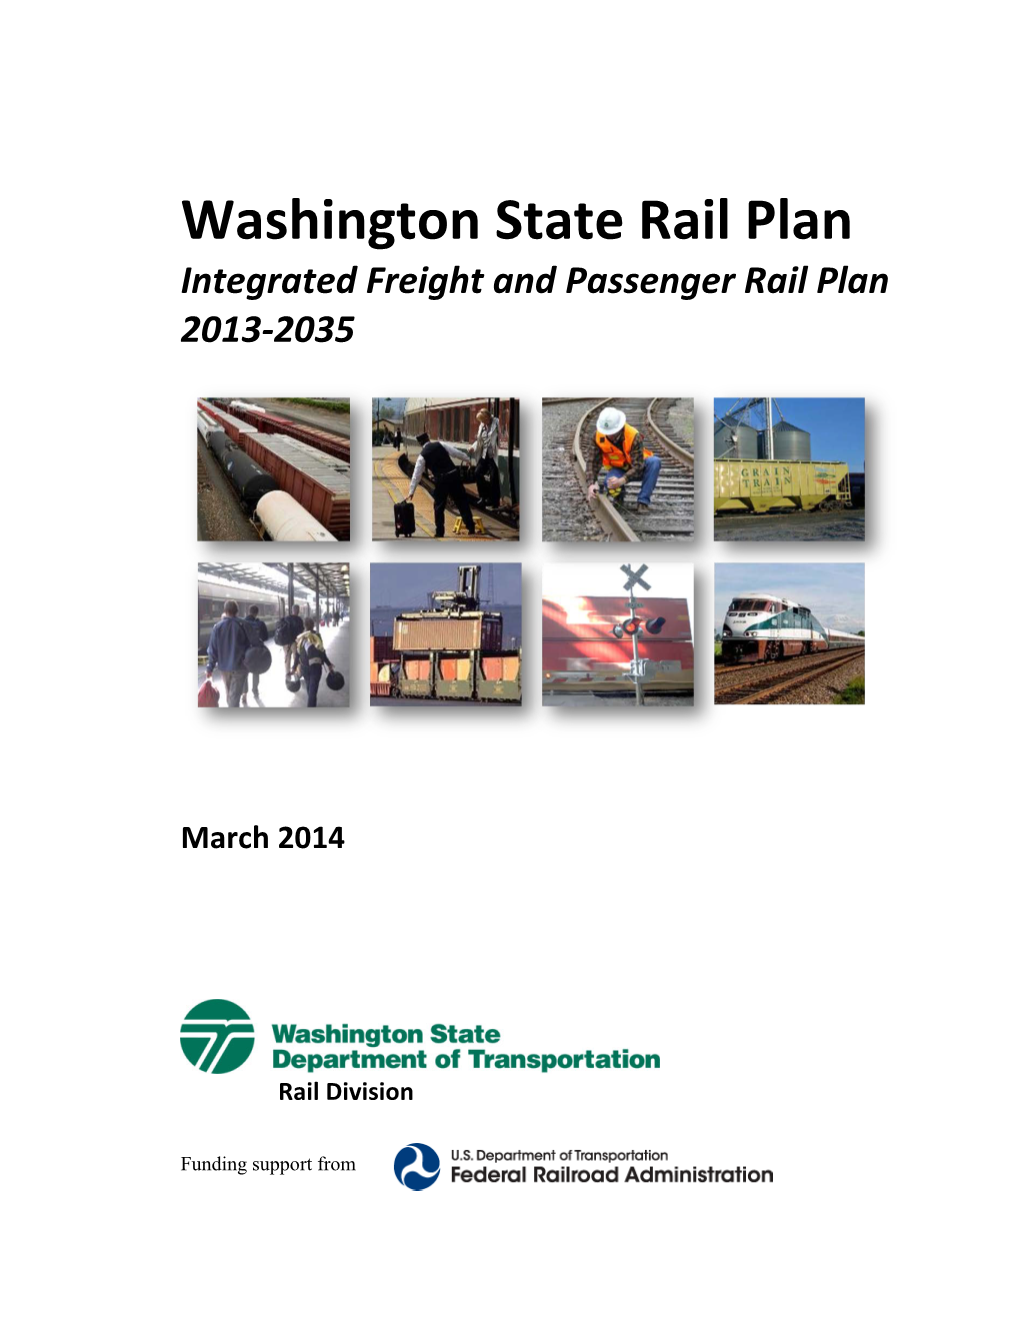 Washington State Rail Plan Integrated Freight and Passenger Rail Plan 2013-2035